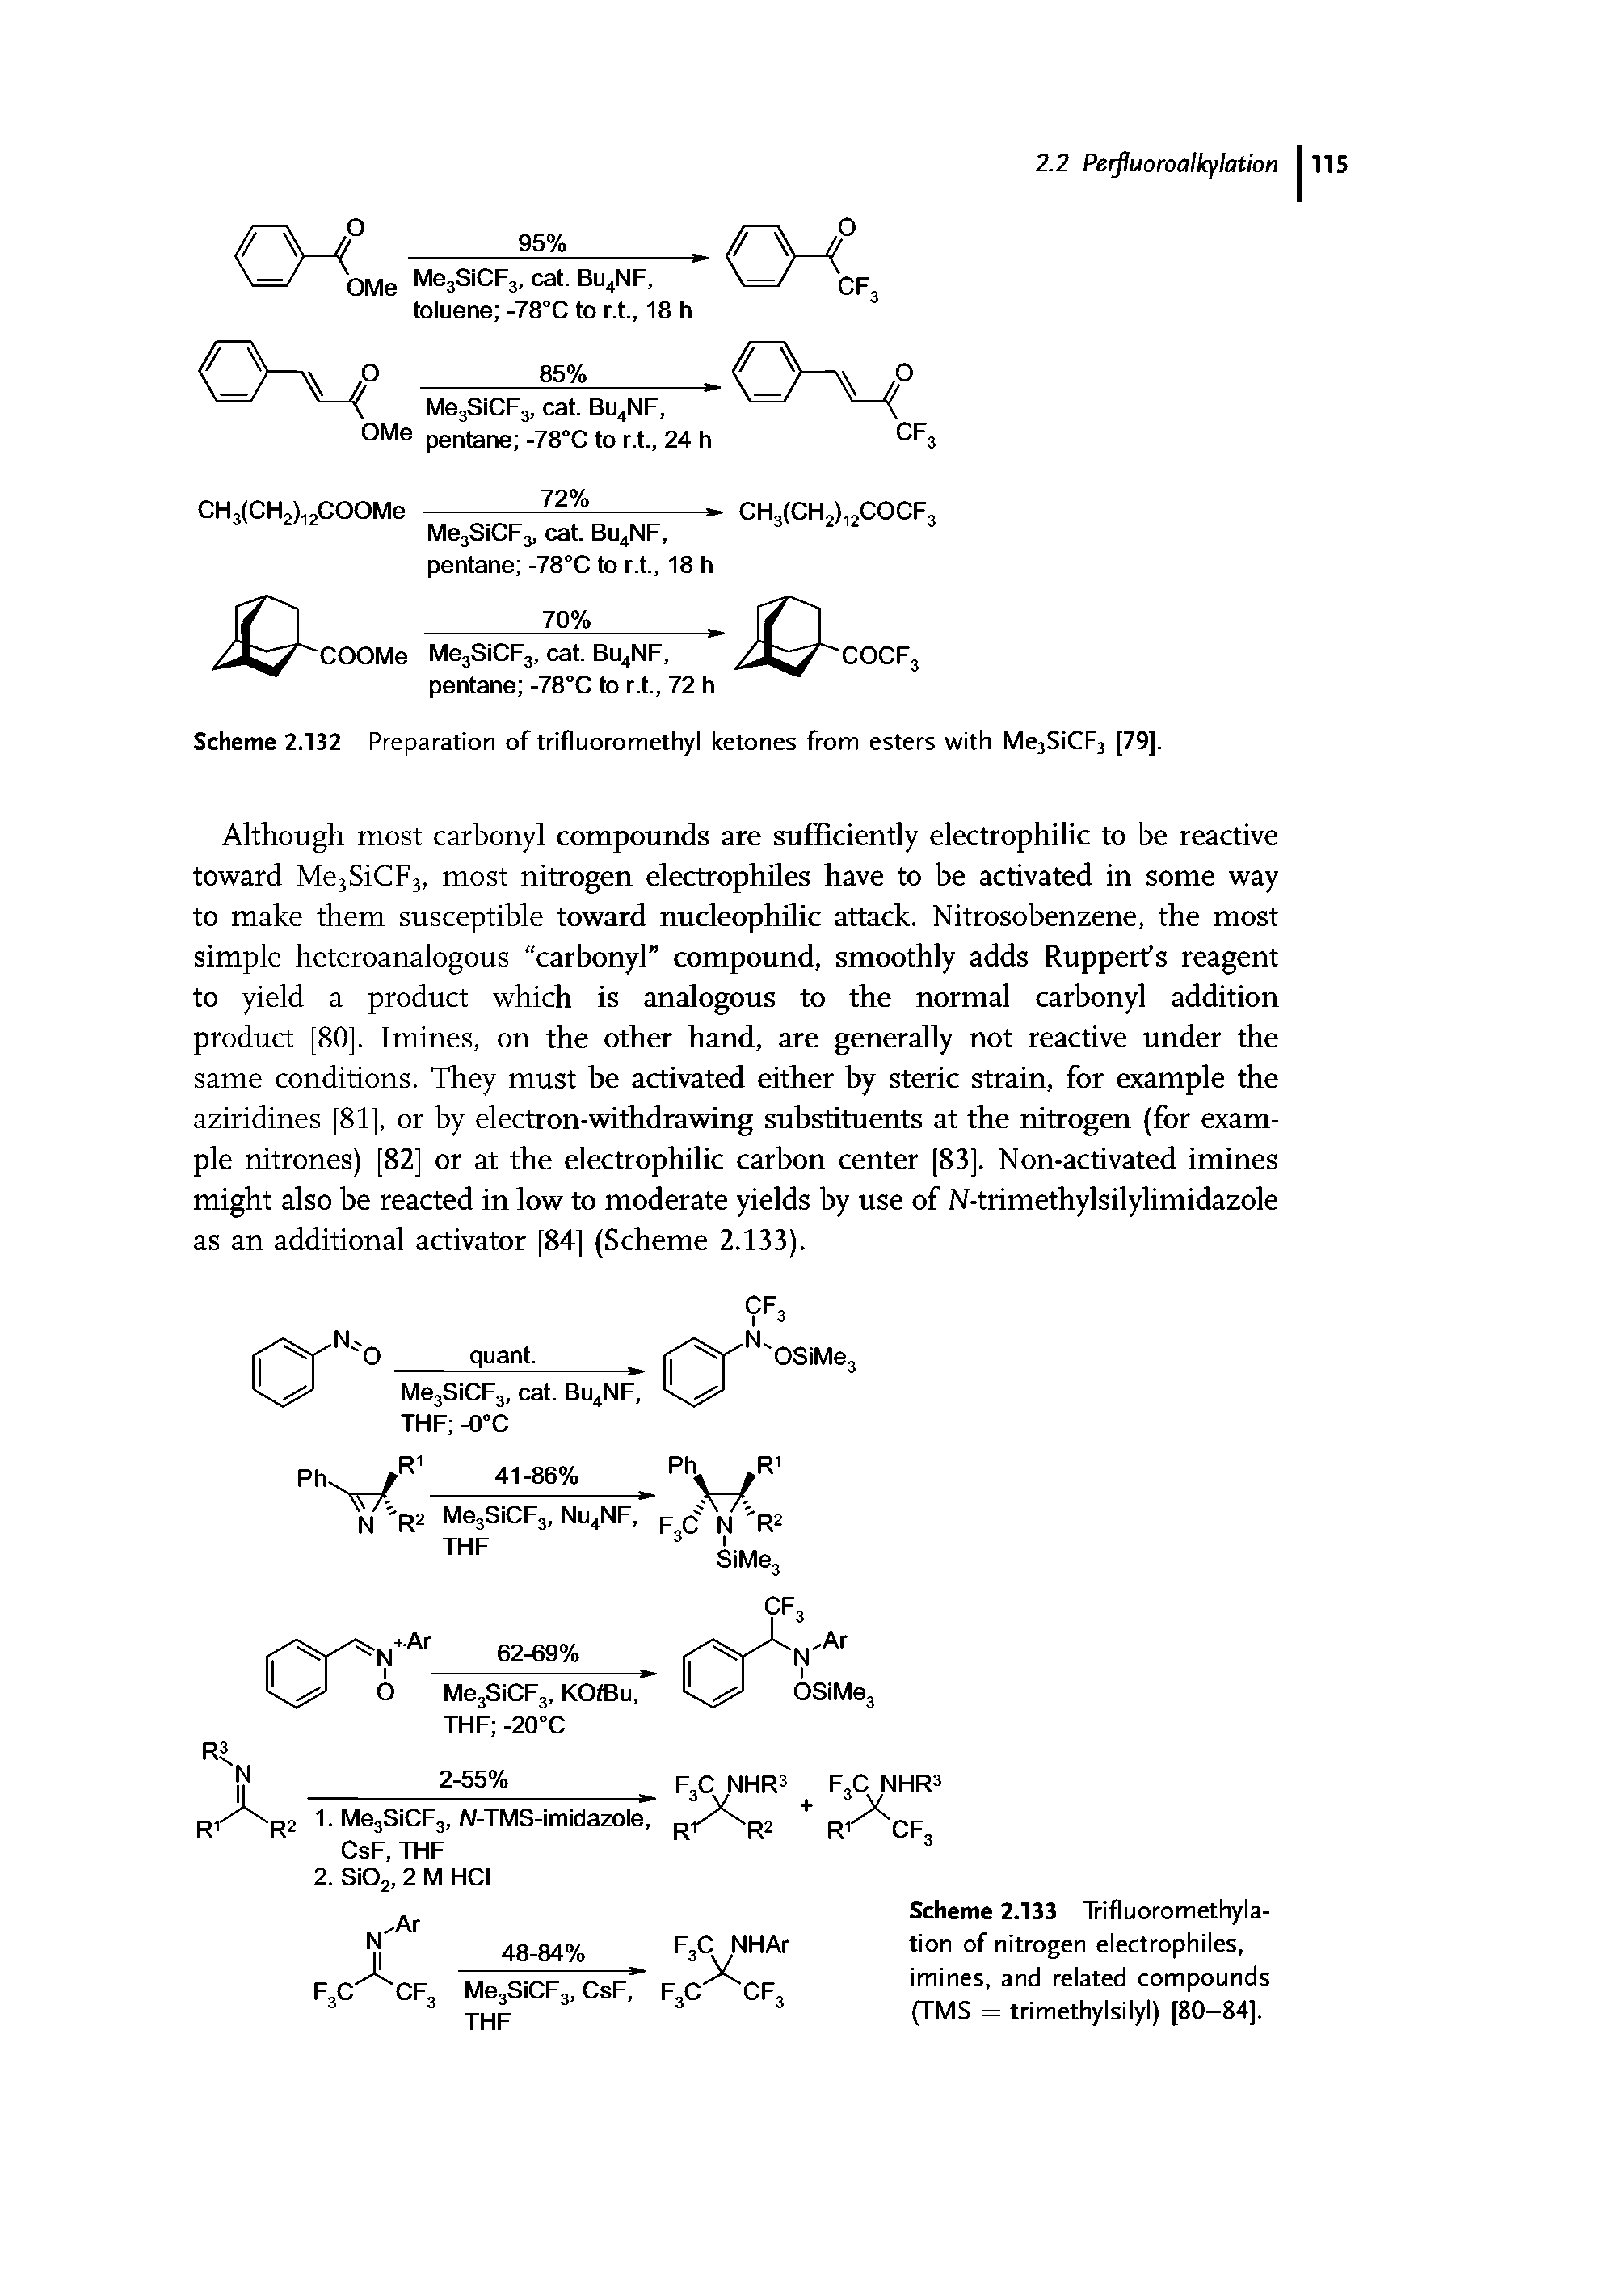 Scheme 2.133 Trifluoromethylation of nitrogen electrophiles, imines, and related compounds (TMS = trimethylsilyl) [80-84].